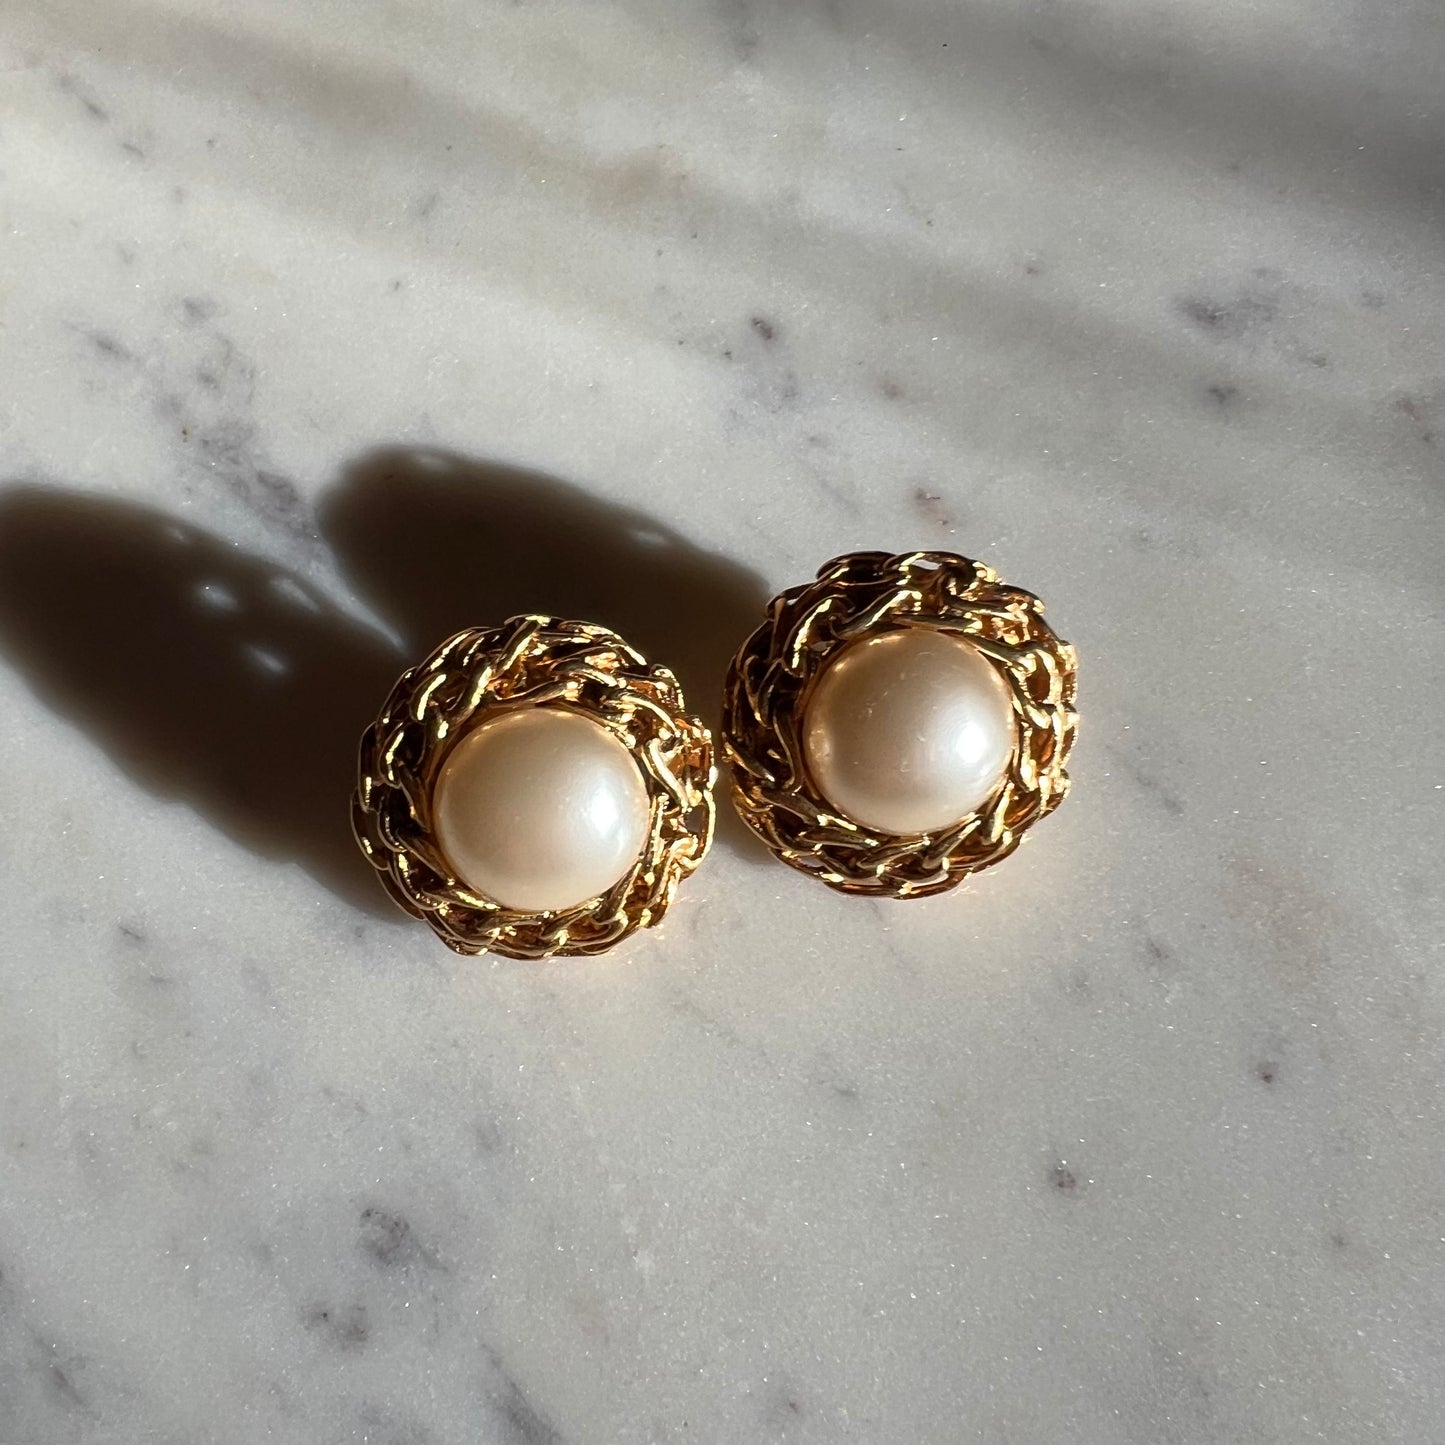 Vintage Chanel earrings gold & pearl 90s